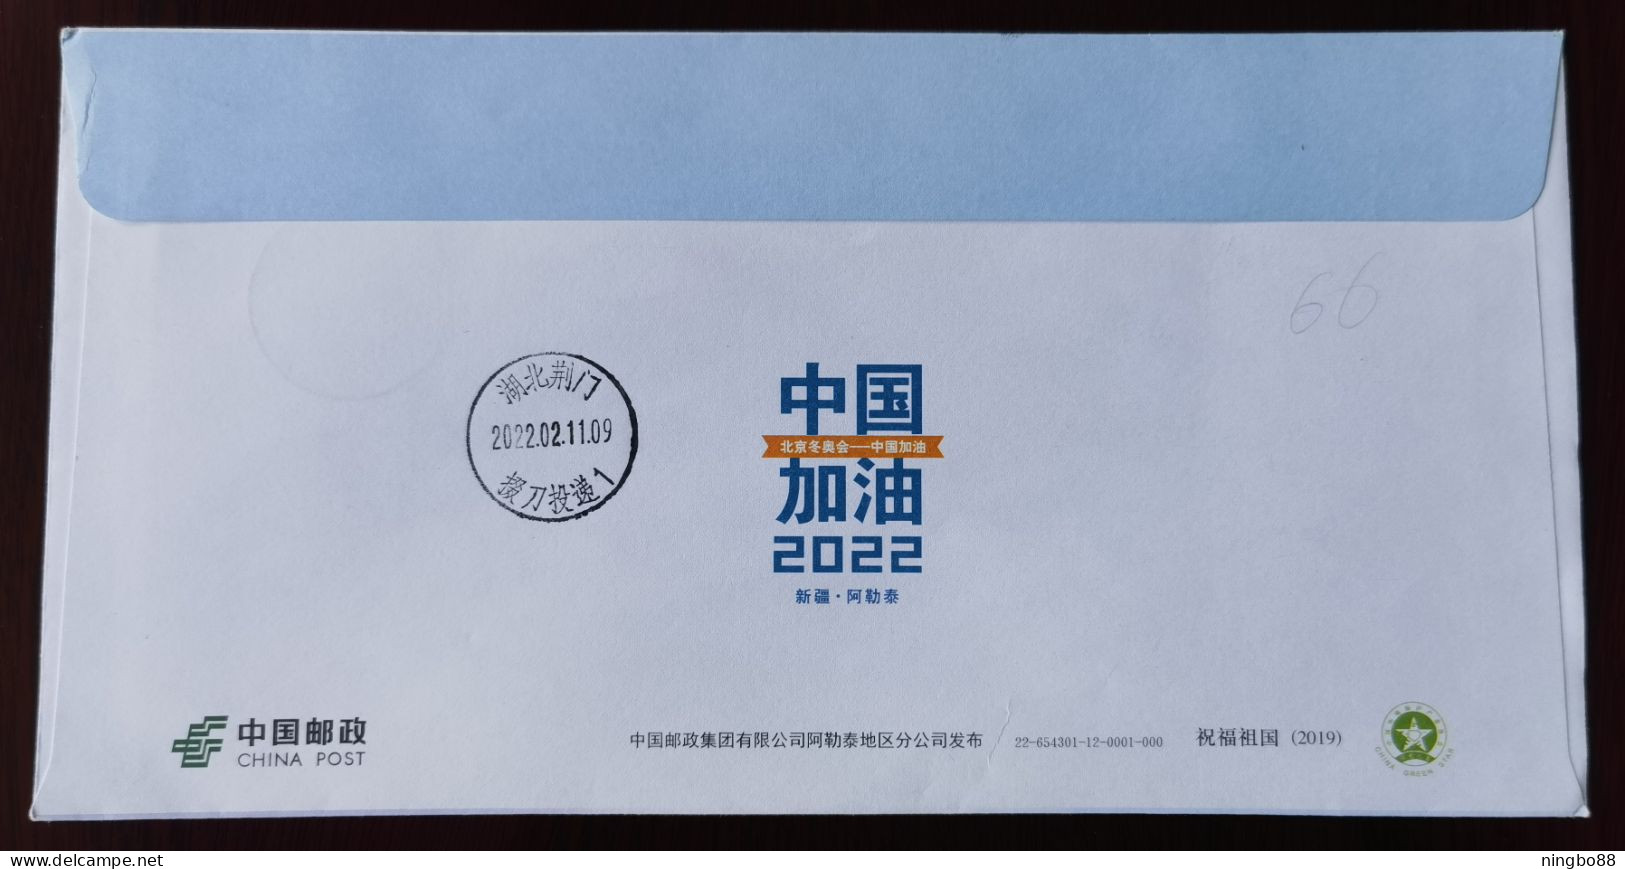 Skiing Player On Giro Snowboard,CN 22 Beijing 2022 Winter Olympic Games "China Cheer On!" Postal Stationery Envelope - Winter 2022: Peking